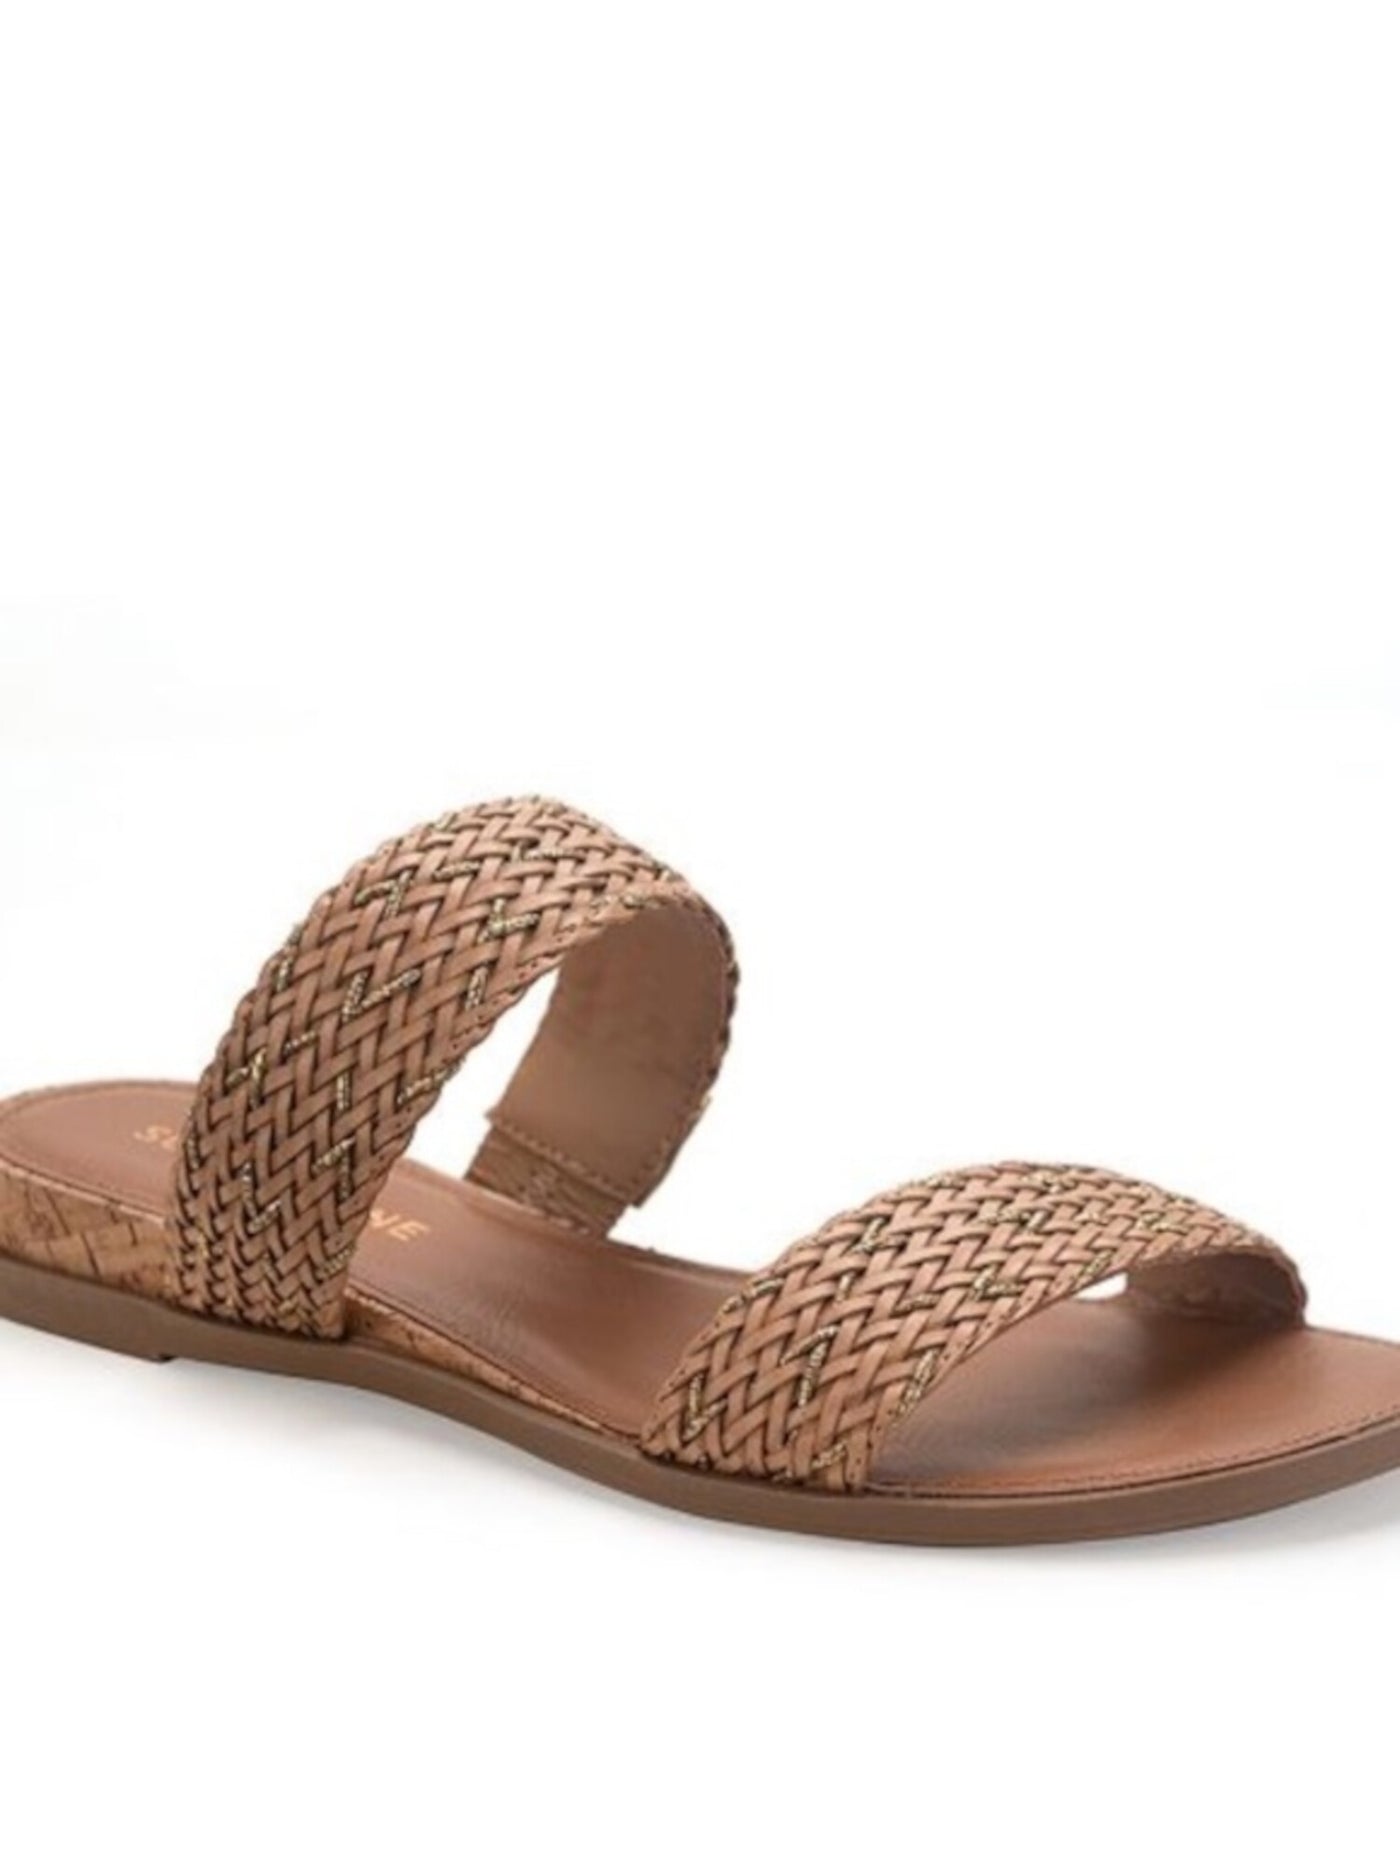 SUN STONE Womens Beige Snakeskin Woven Cushioned Easten Round Toe Wedge Slip On Slide Sandals Shoes 6.5 M